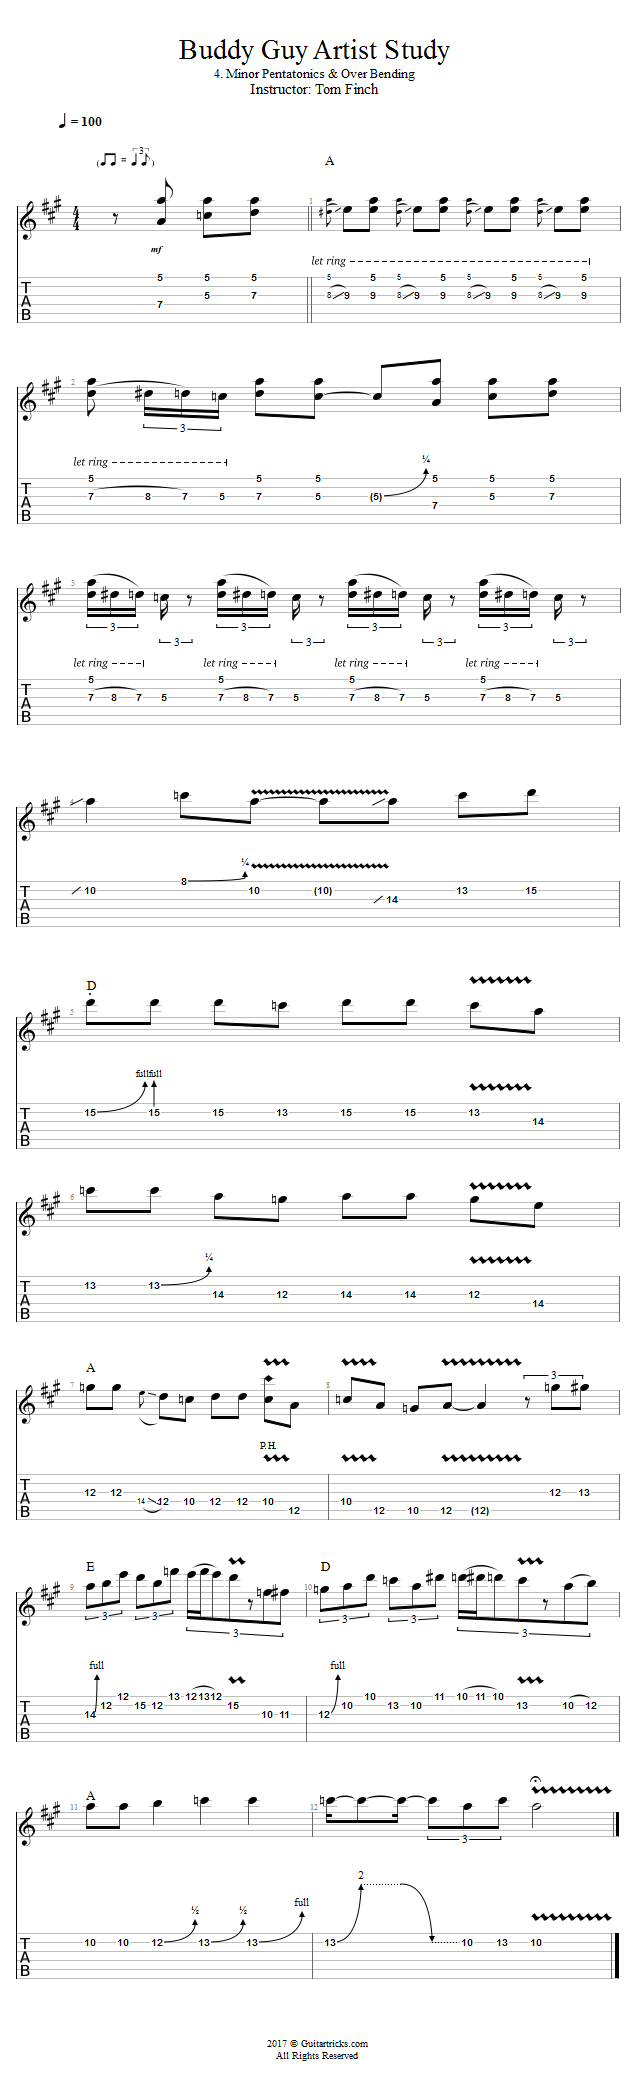 Minor Pentatonics & Over-Bending song notation